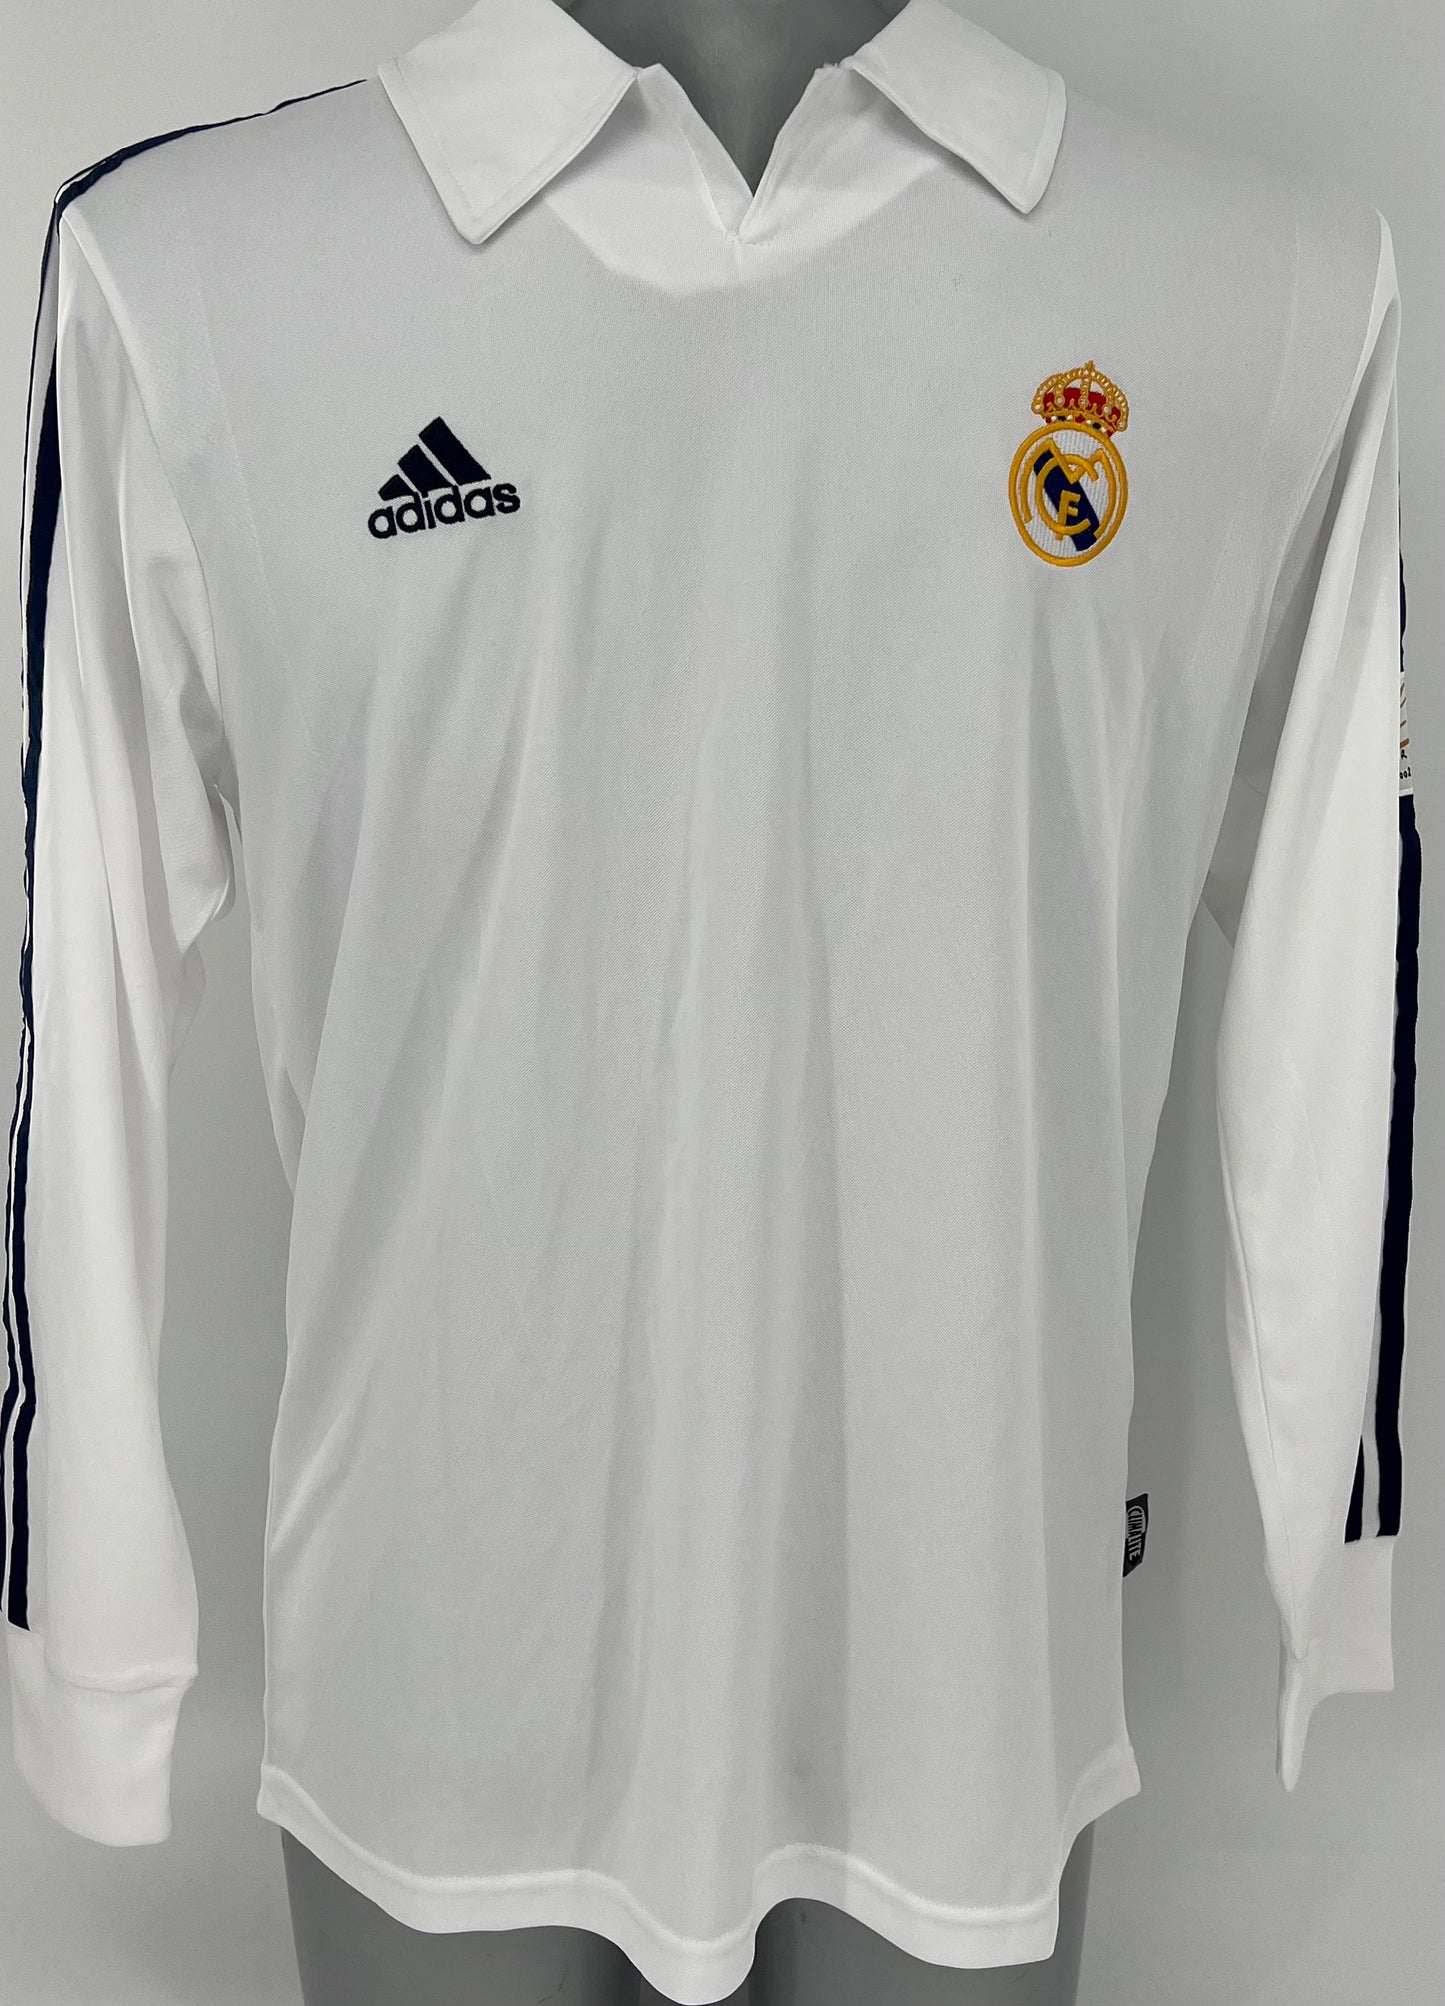 Raul Signed Real Madrid Shirt